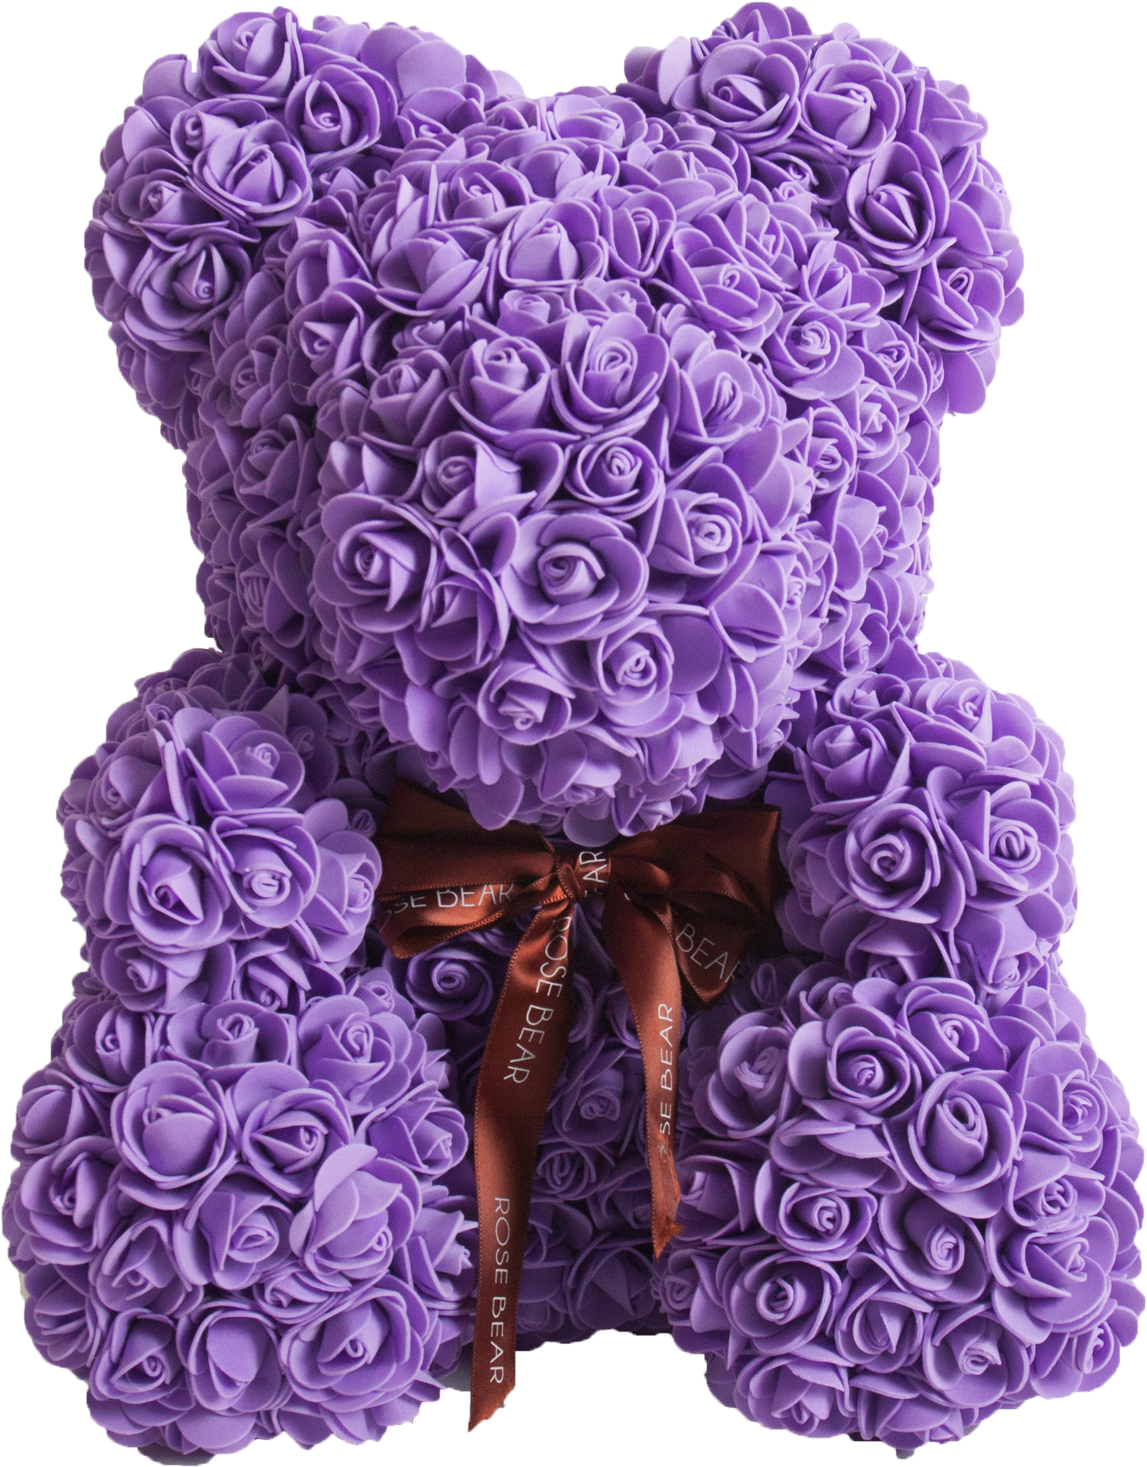 A Purple Teddy Bear Made Of Roses